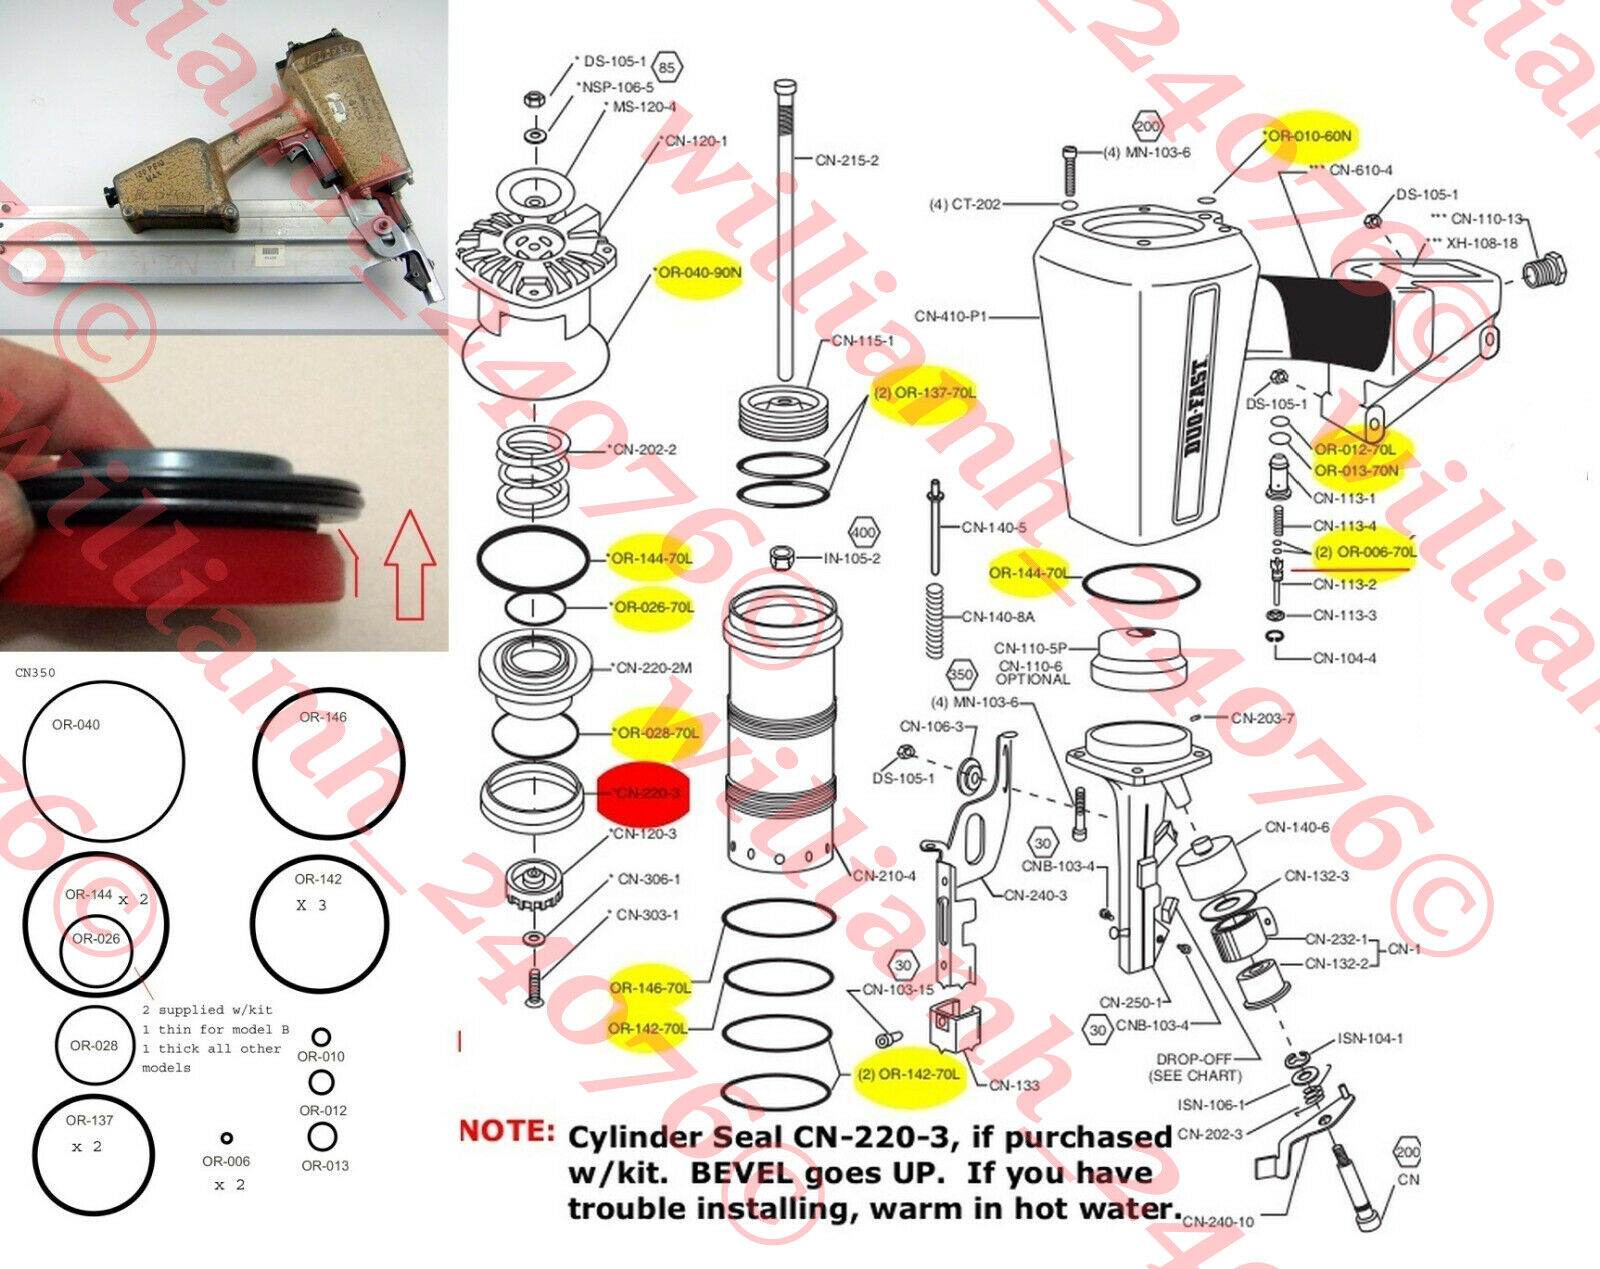 Duo-Fast CN350 O ring + Cylinder Seal Parts Kit